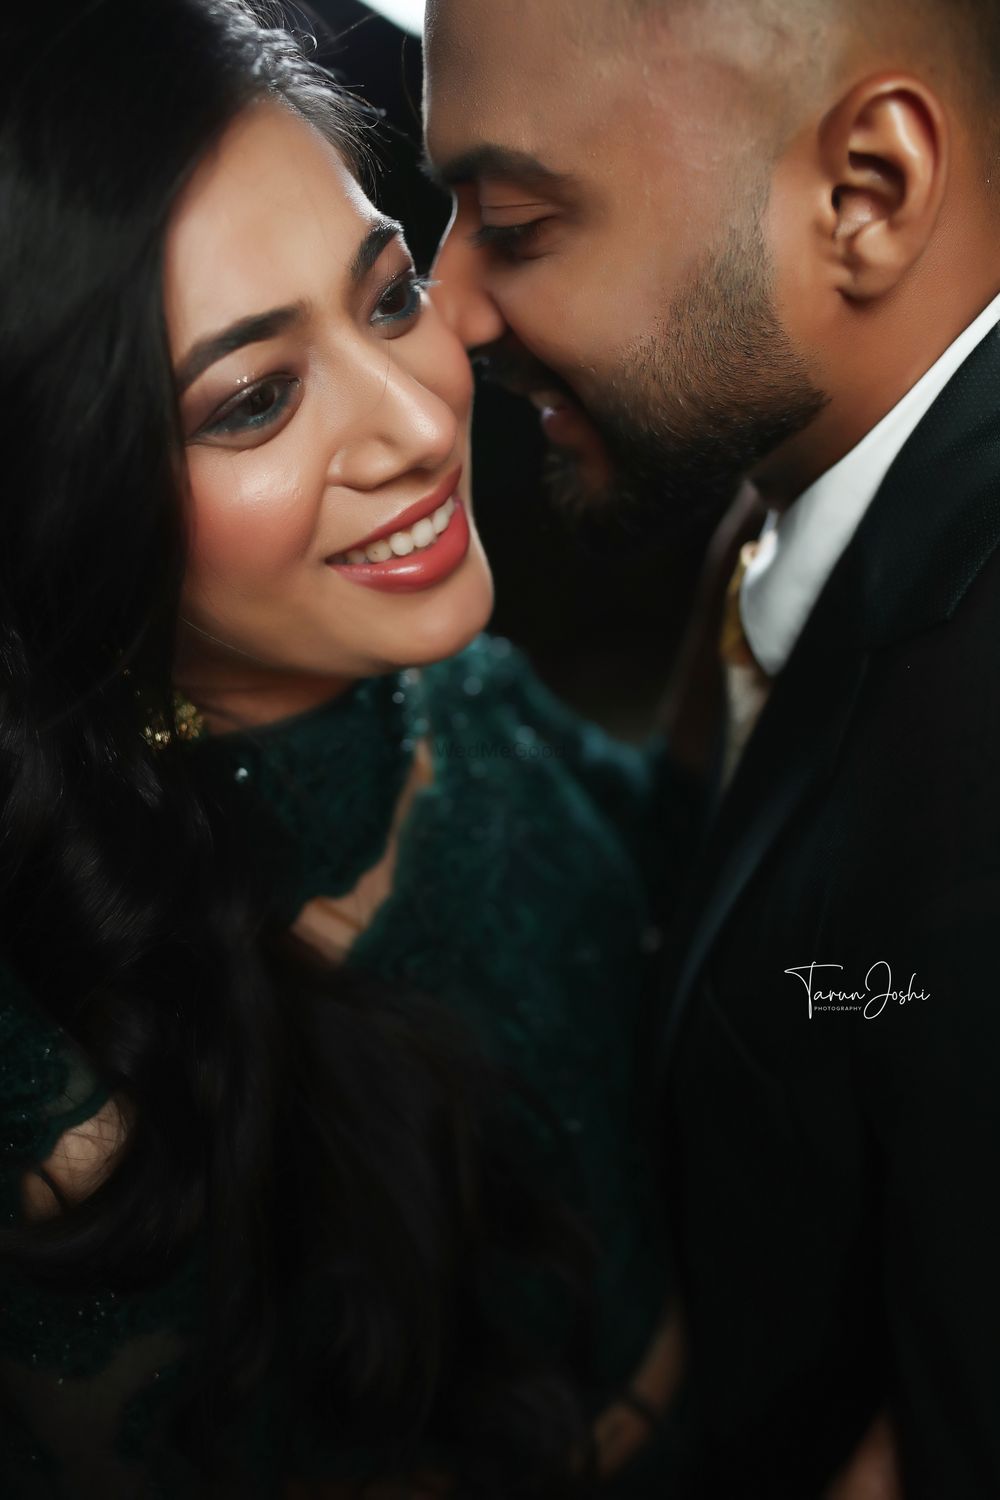 Photo From Pre-Weddings - By Tarun Joshi Photography